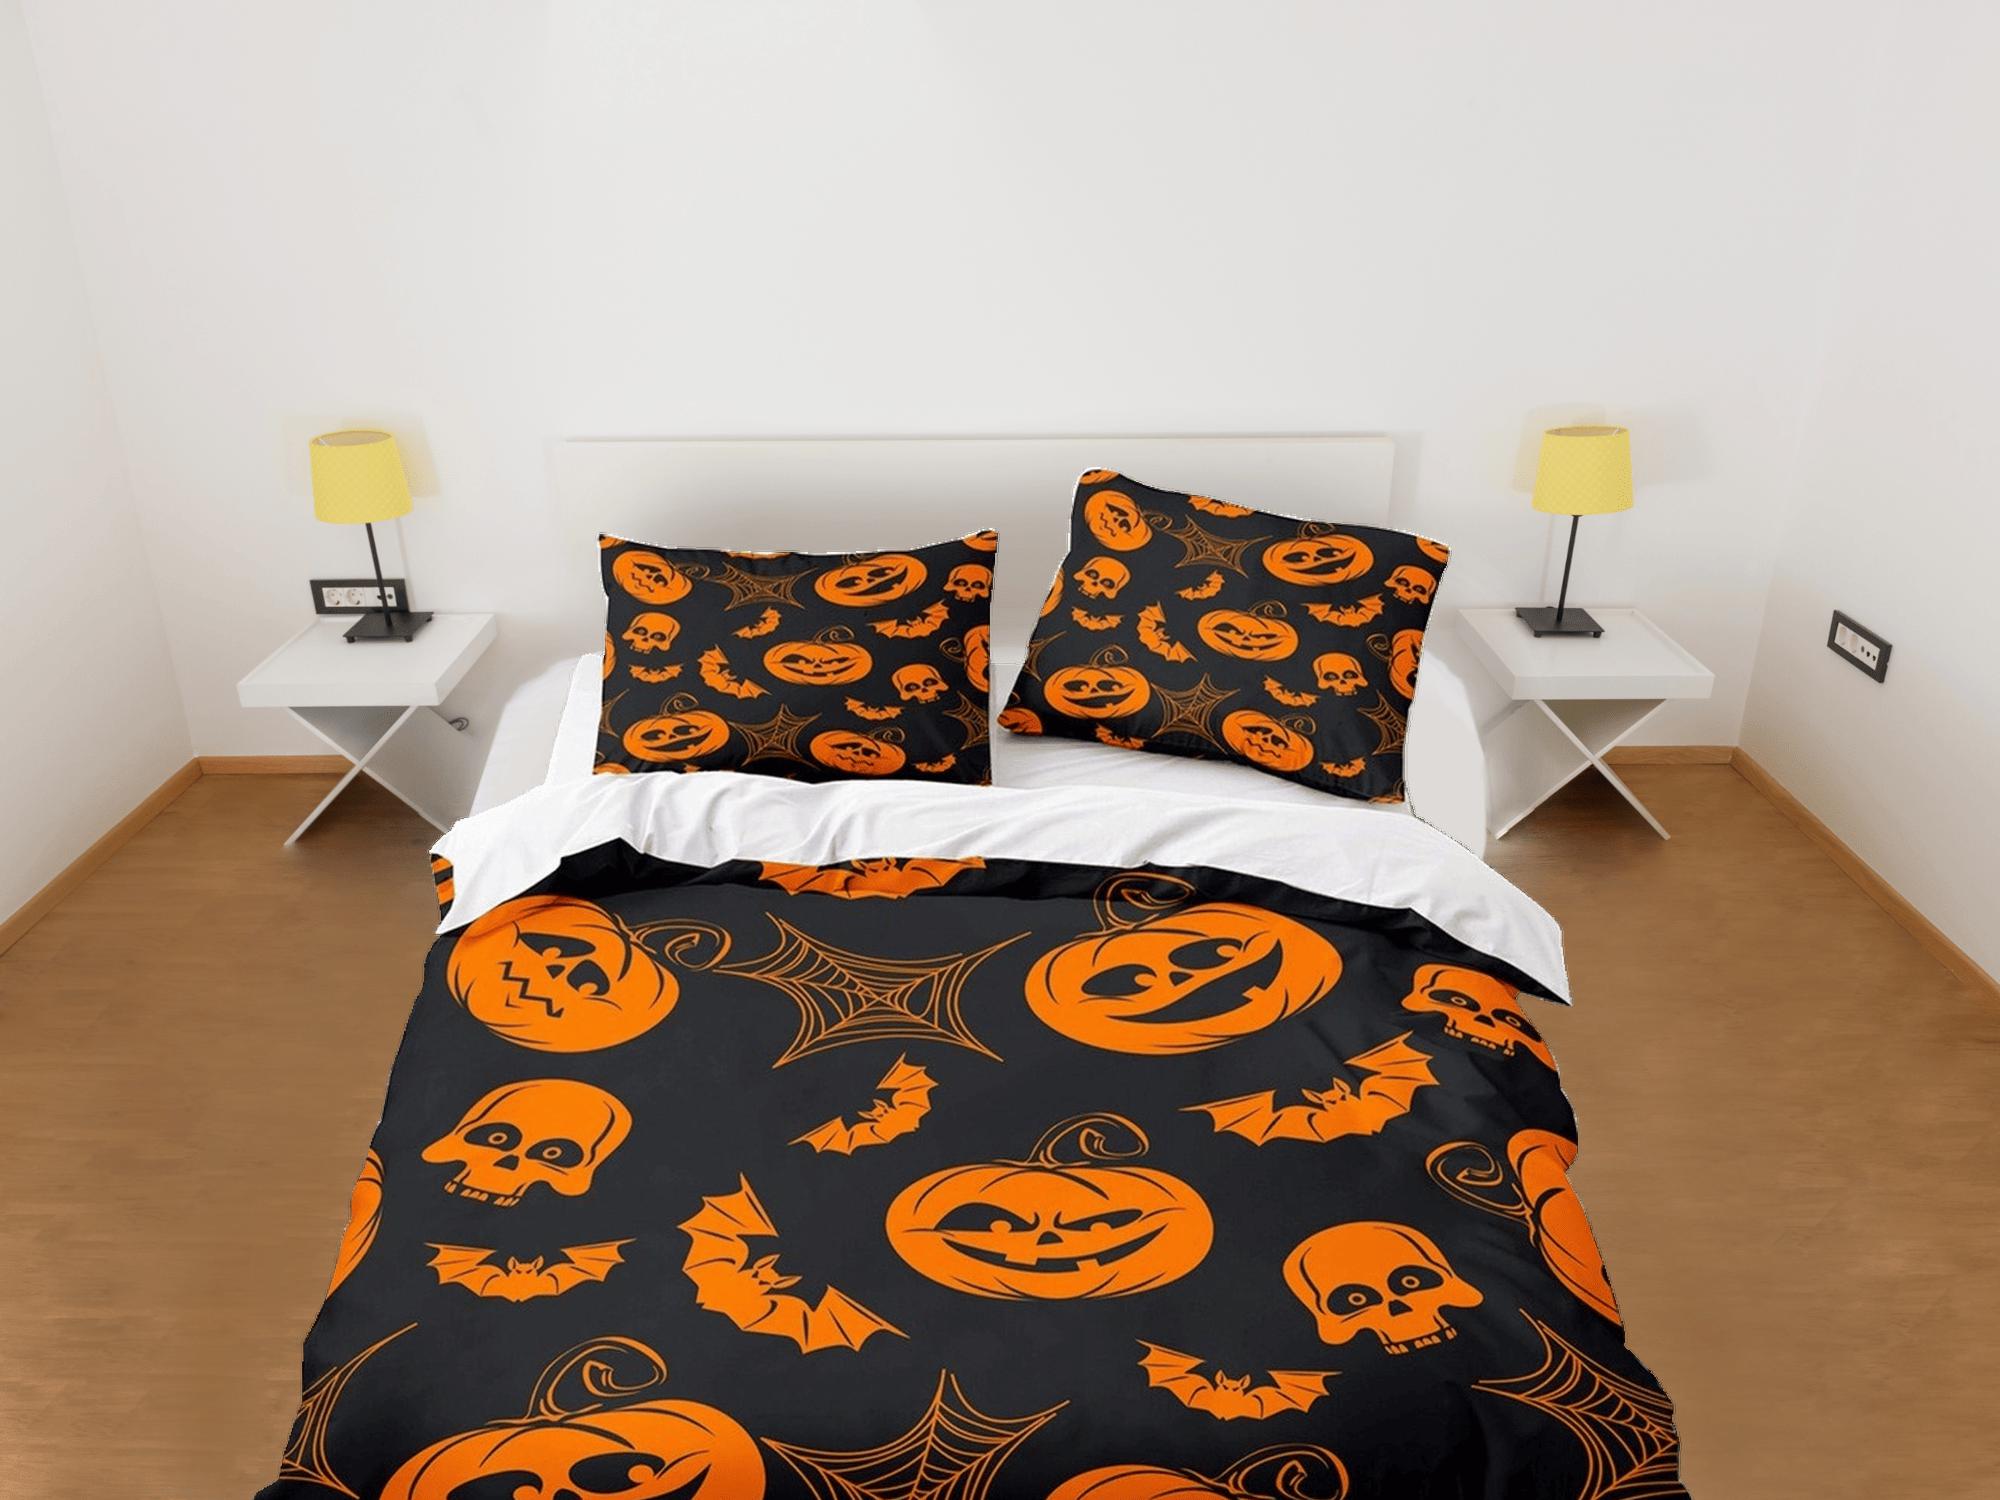 daintyduvet Pumpkin retro halloween bedding & pillowcase, black duvet cover set dorm bedding, halloween decor, nursery toddler bedding, halloween gift